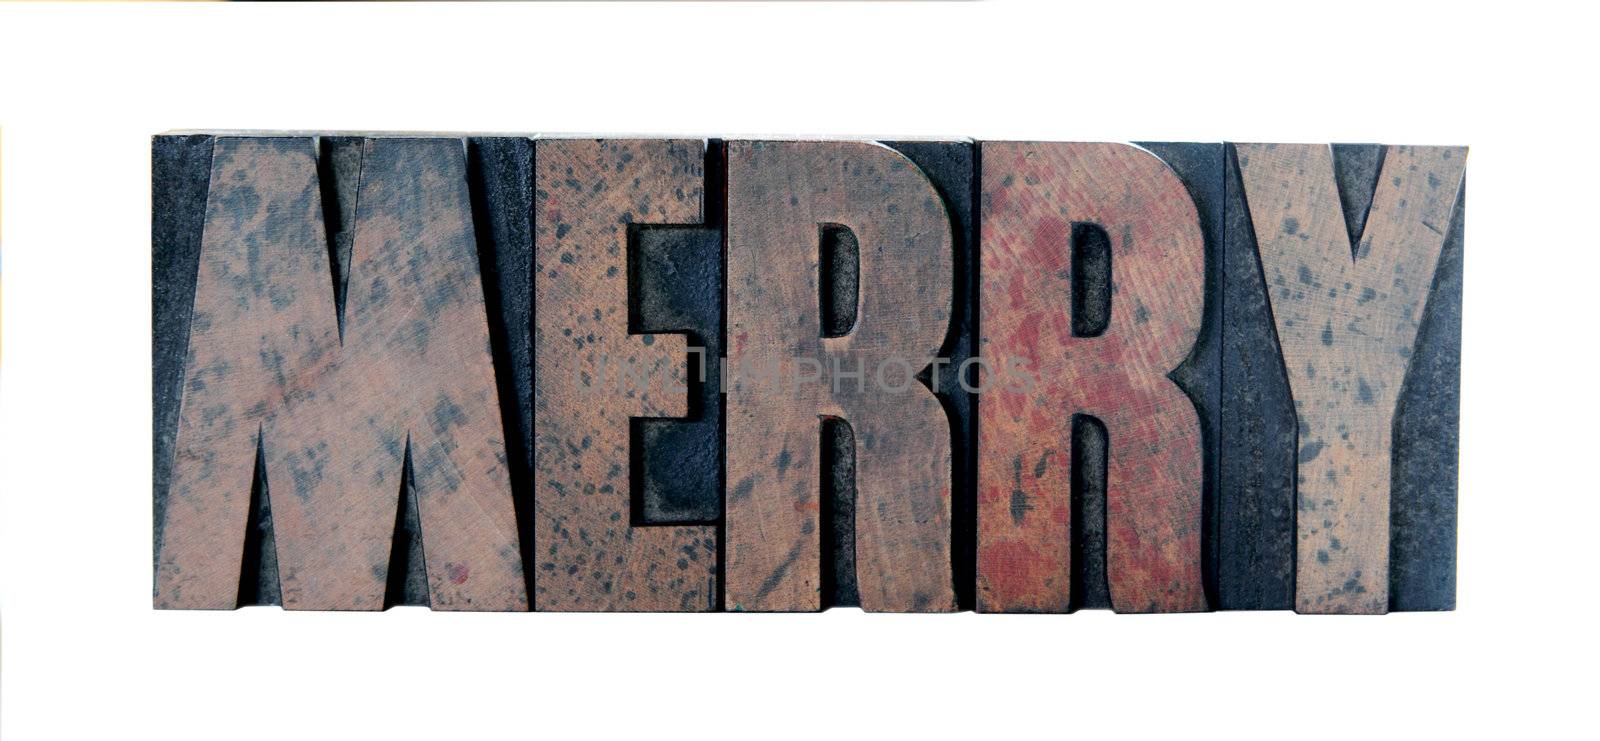 merry in old letterpress wood type by nebari